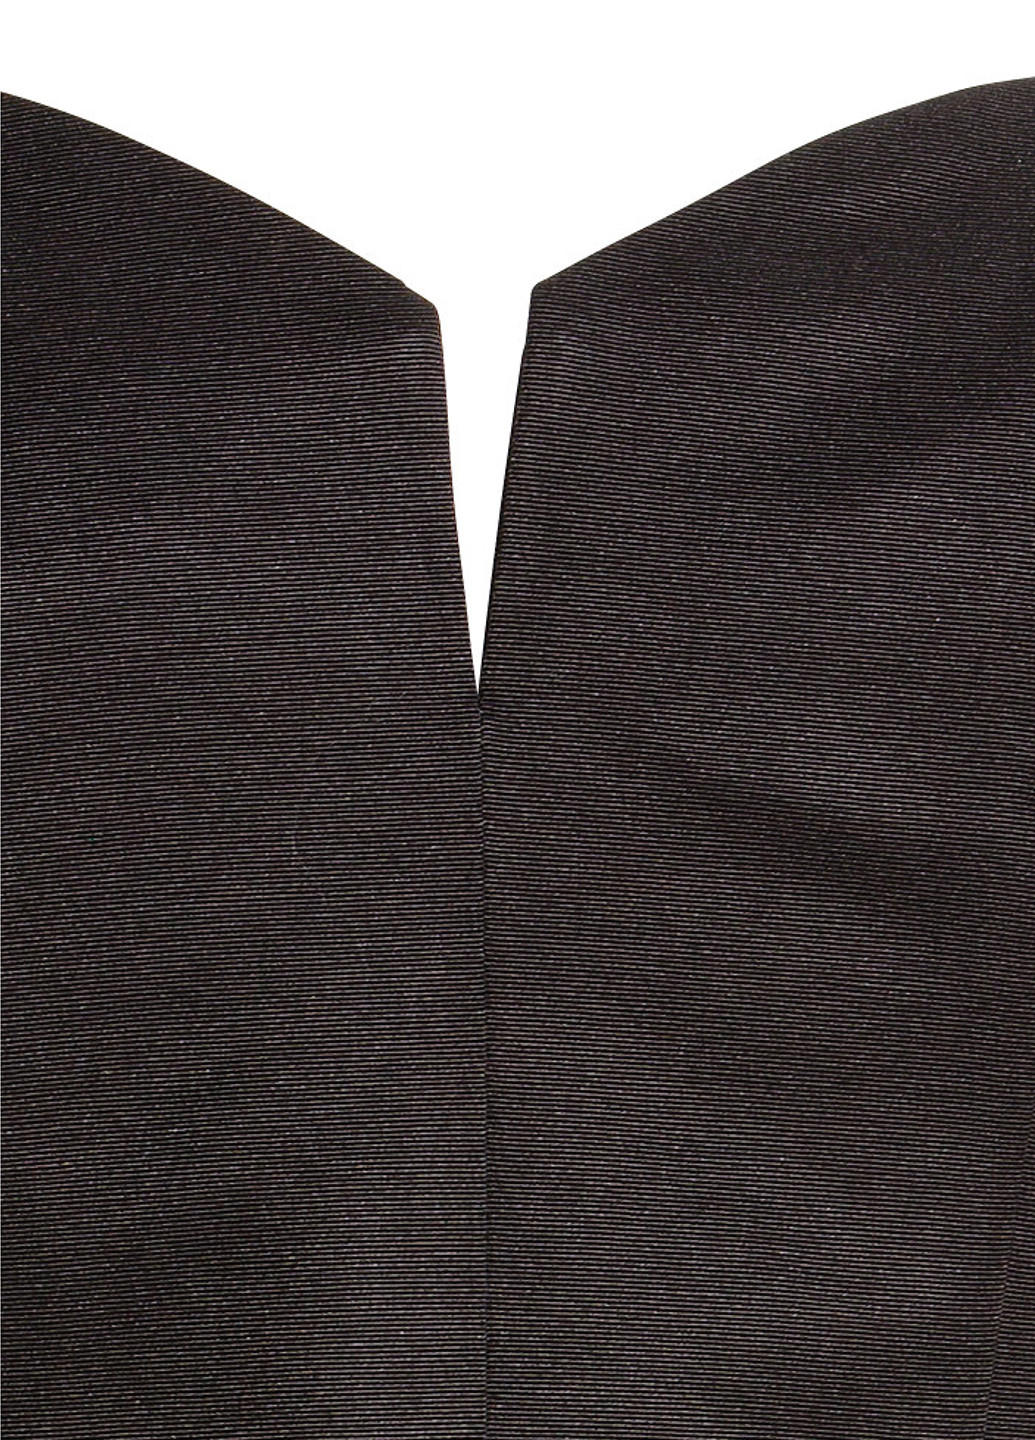 Комбинезон H&M комбинезон-шорты однотонный чёрный кэжуал